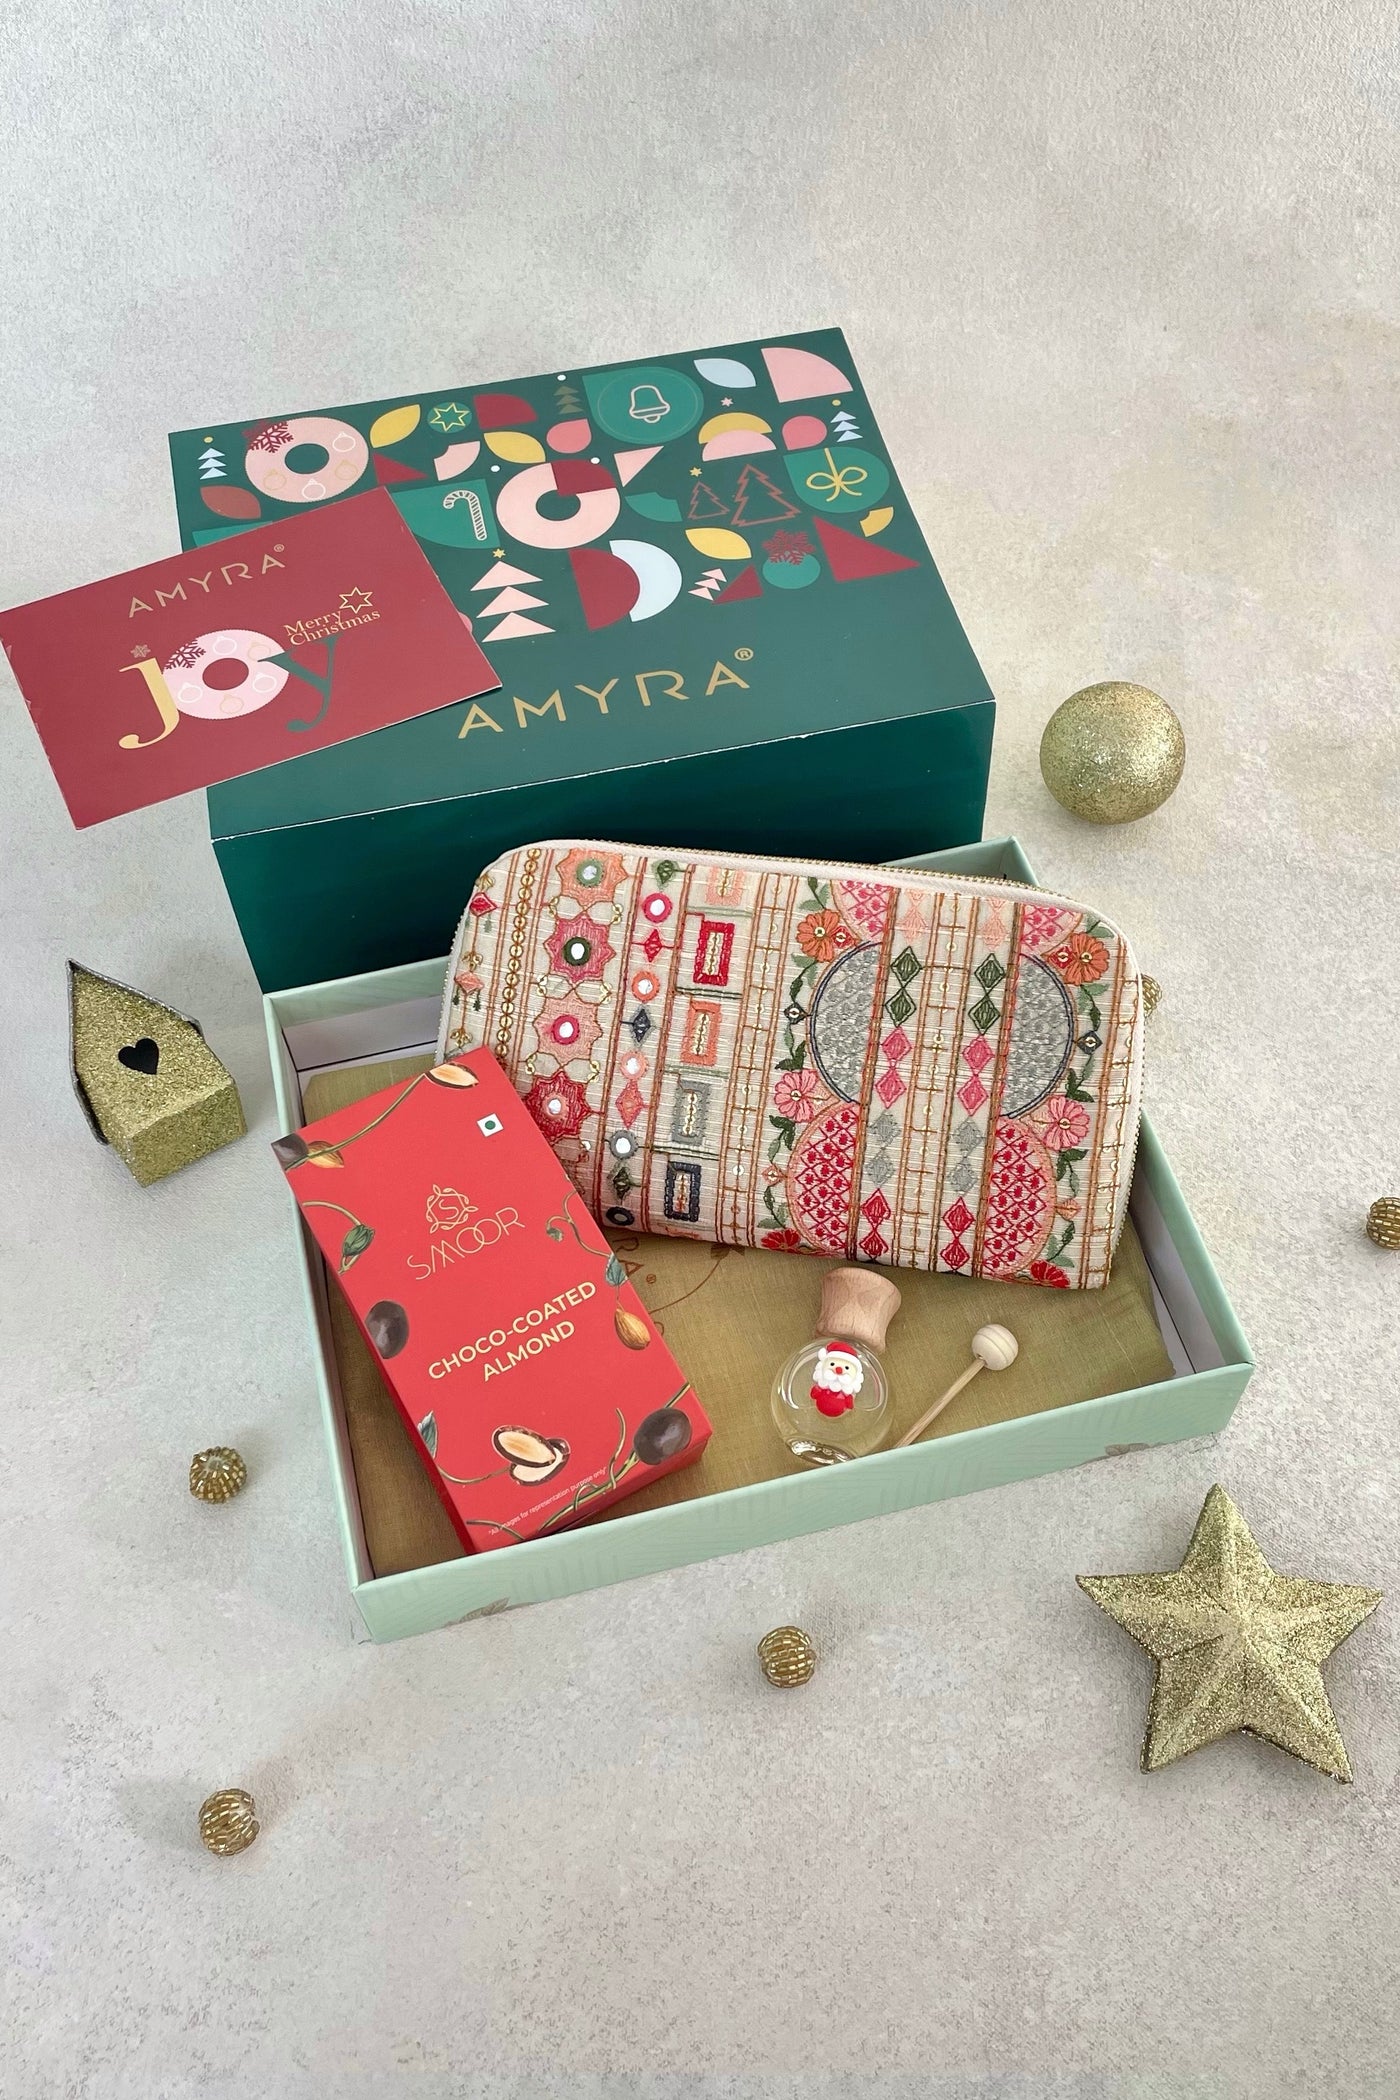 AMYRA Christmas Hamper - Rafia Wallet - Scented & Gourmet Box